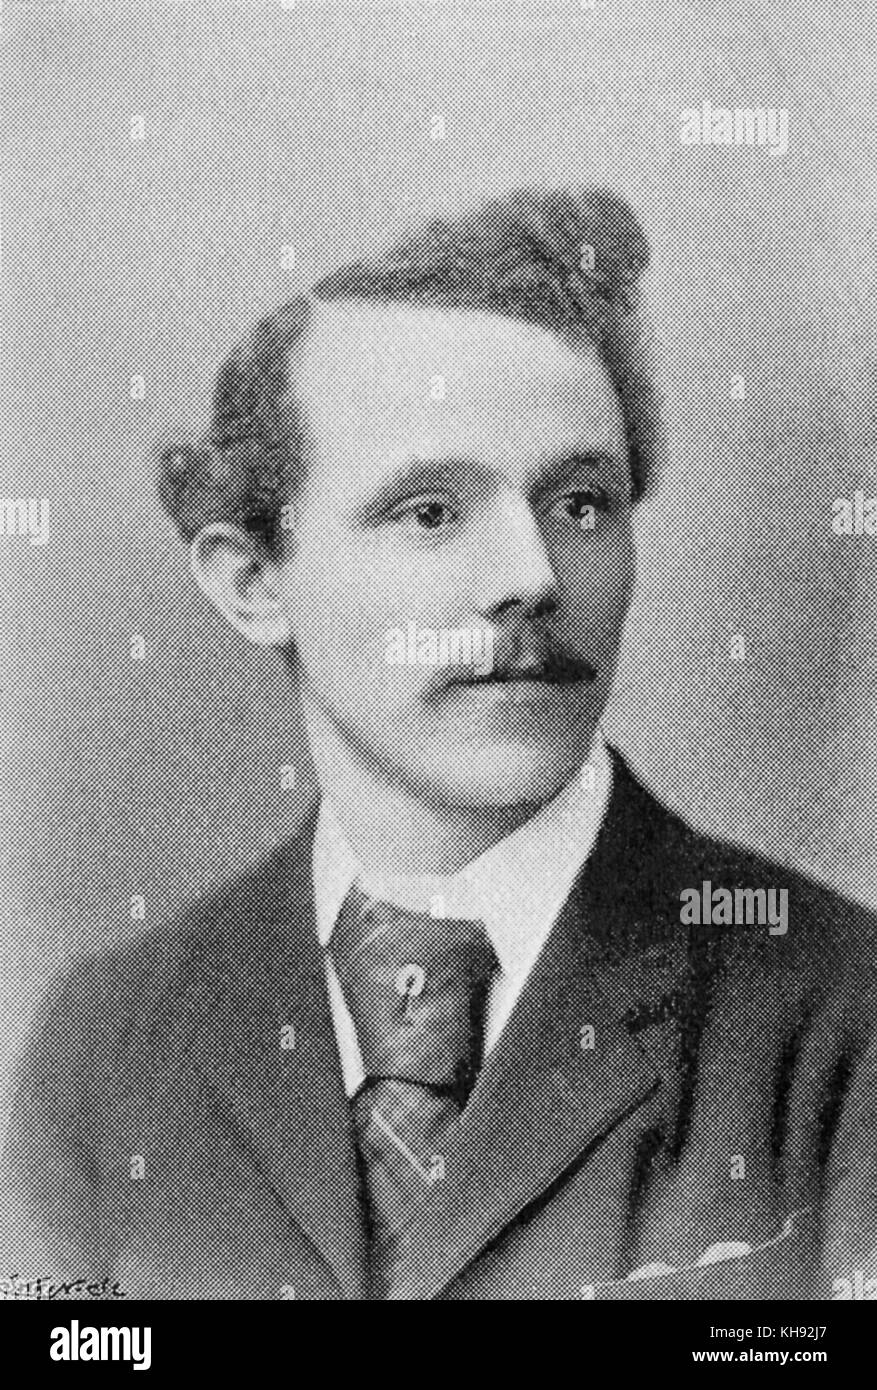 E.D.Lloyd - protrait of Welsh organist who had a residency at Welsh Presbyterian Church in London. Born 1868. Stock Photo